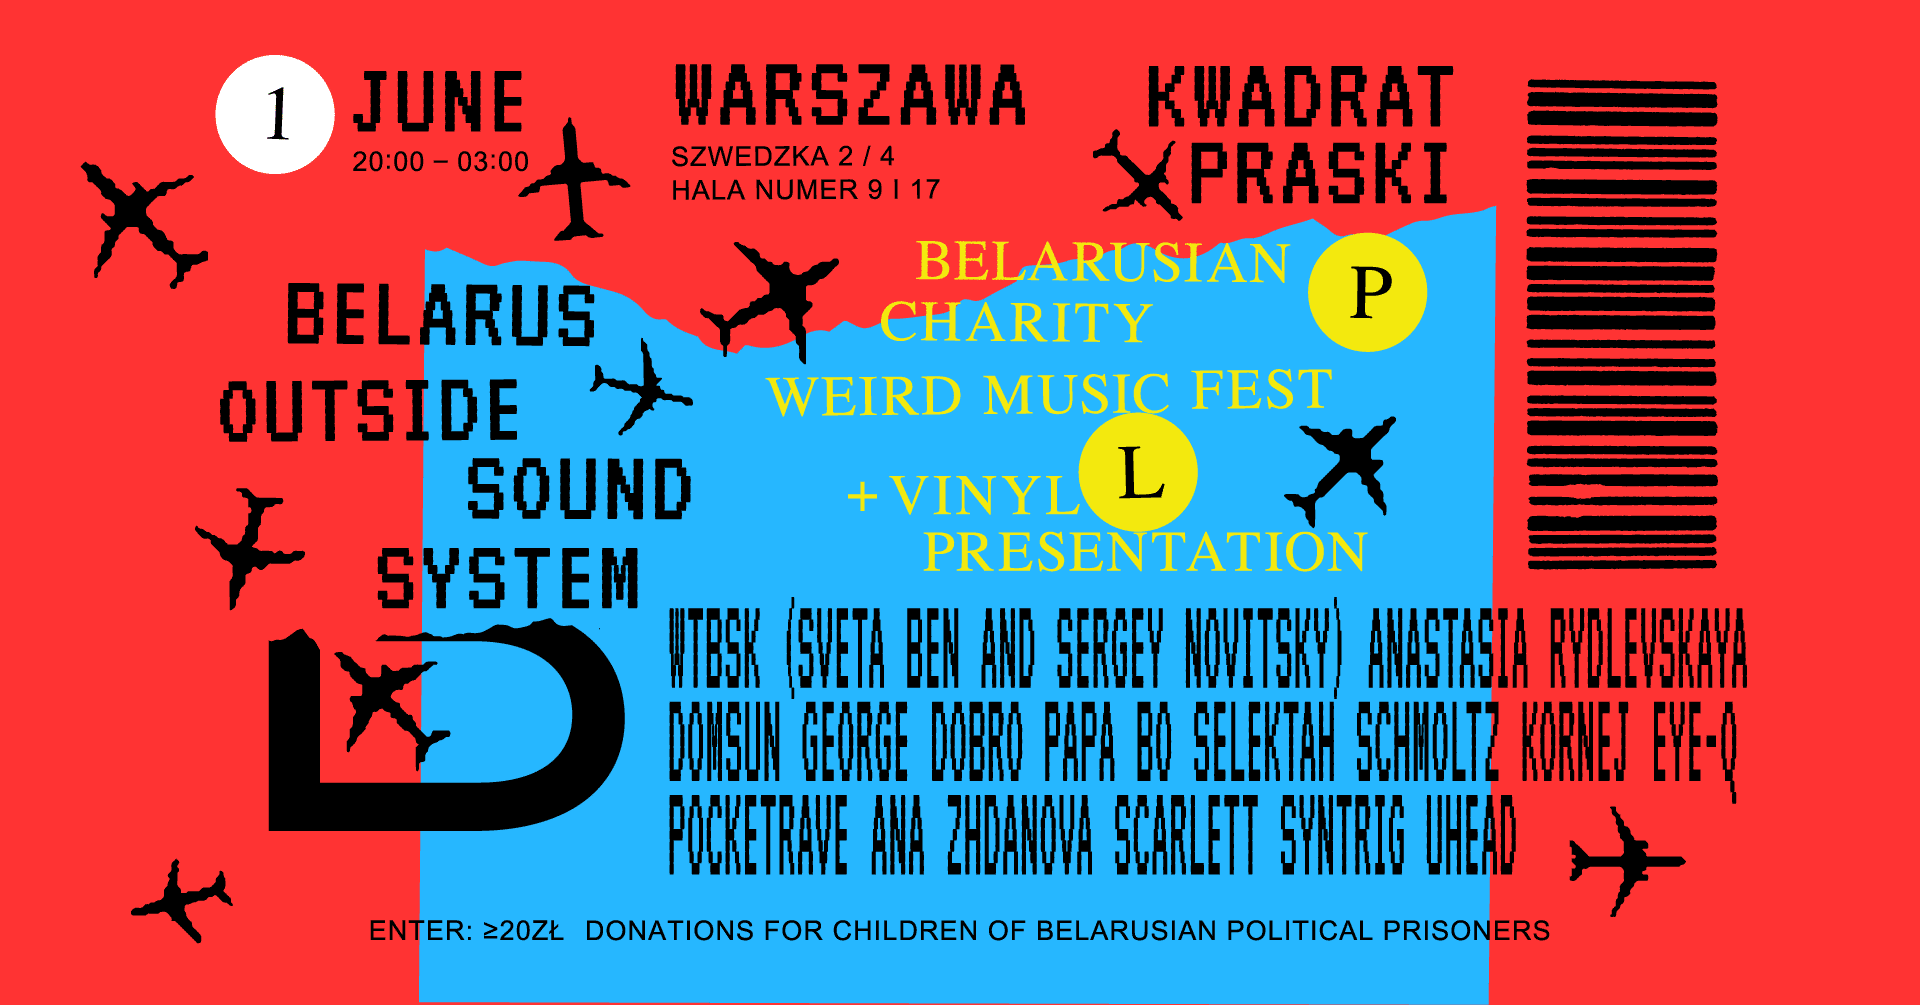 BELARUS OUTSIDE SOUND SYSTEM - Belarusian charity weird music fest + VINYL presentation - フライヤー表